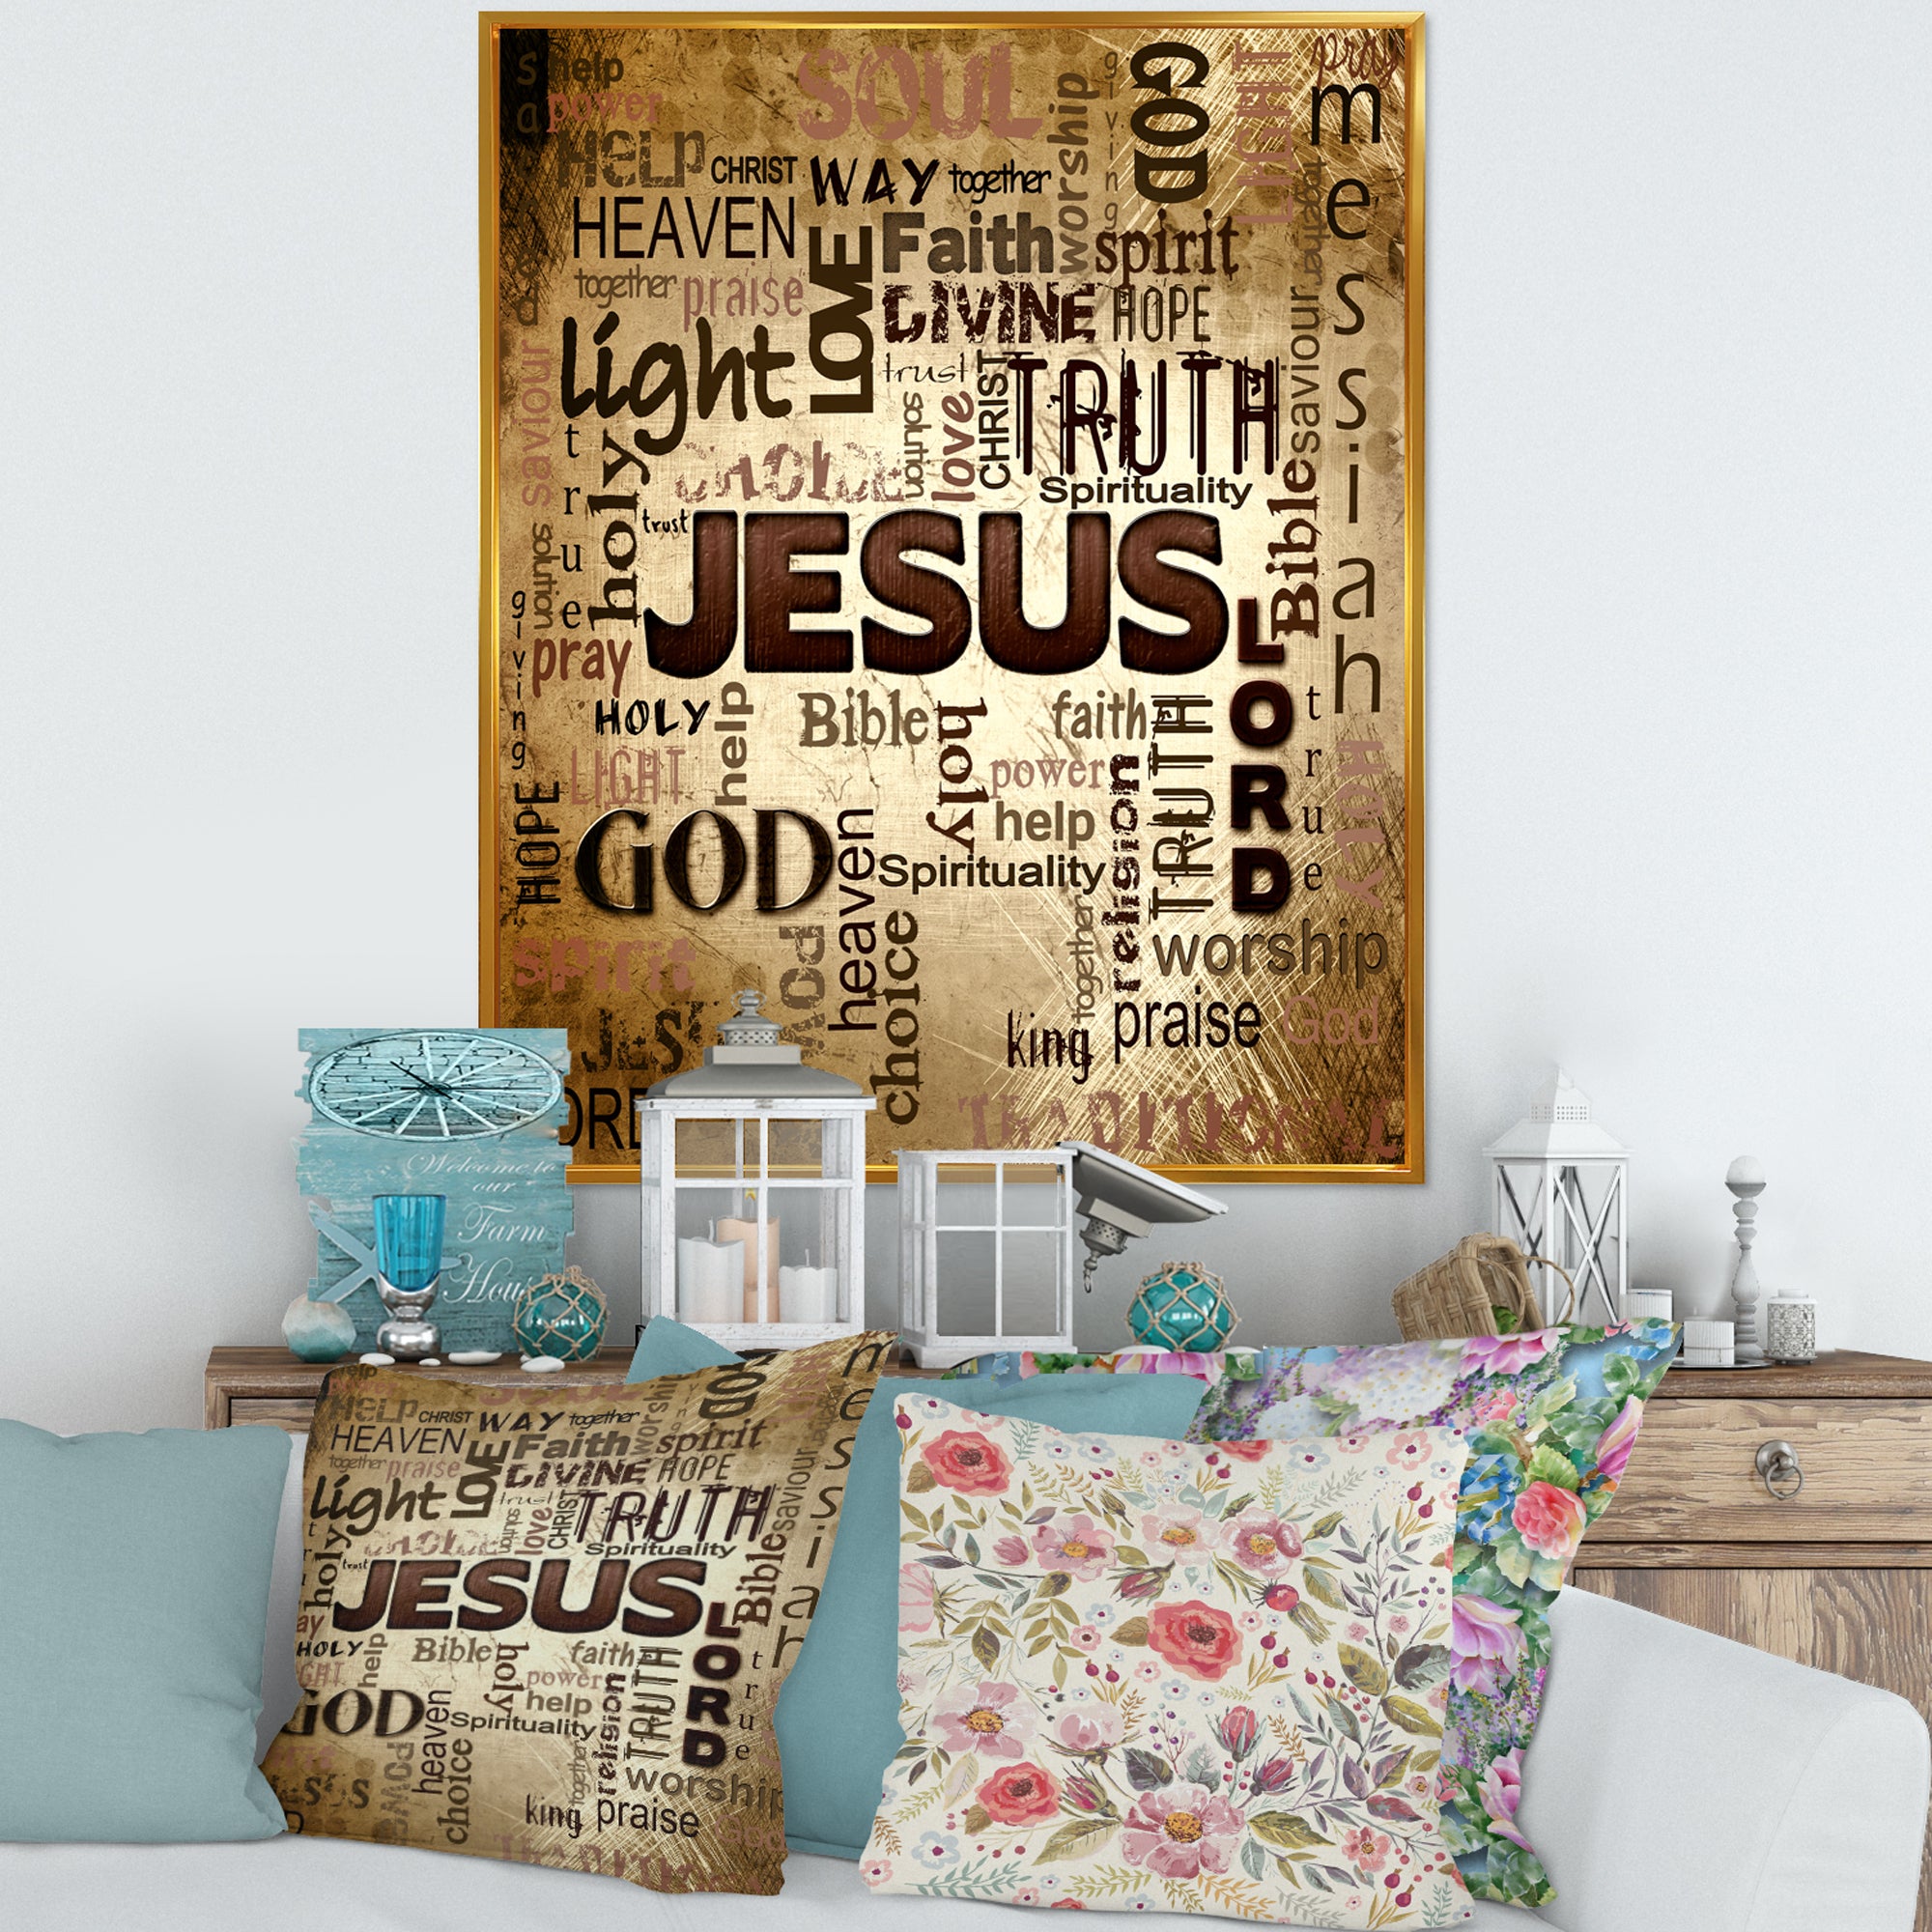 Jesus' word cloud in grunge background